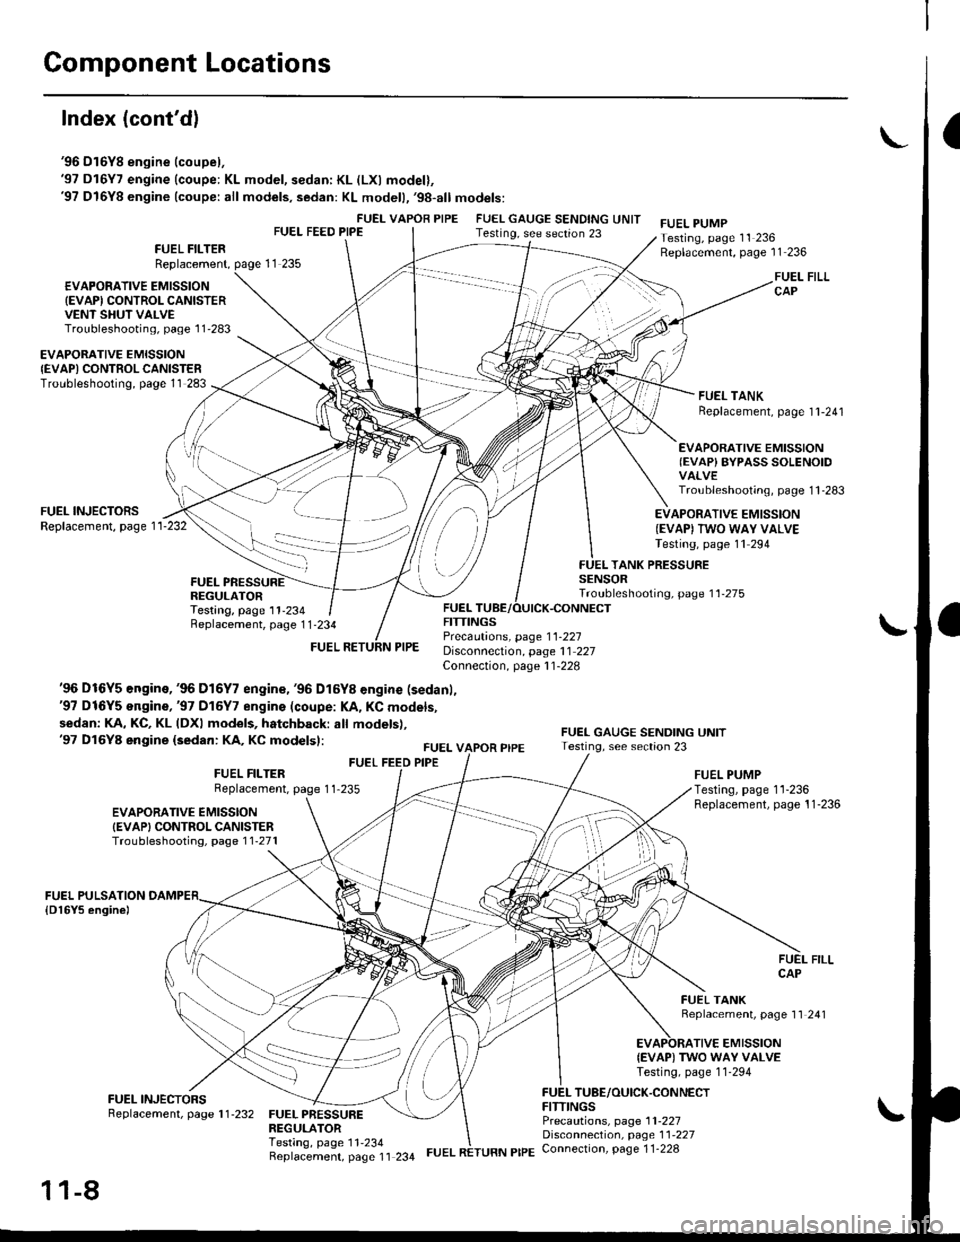 HONDA CIVIC 1996 6.G Workshop Manual Component Locations
Index (contdl
96 D16Y8 engine (coupel,97 D16Y7 engine (coupe: KL model, sedan: KL (LXl model),97 D16Y8 engine (coupe: all models, sedan: KL modell,98-all models:
FUEI- VAPOR P